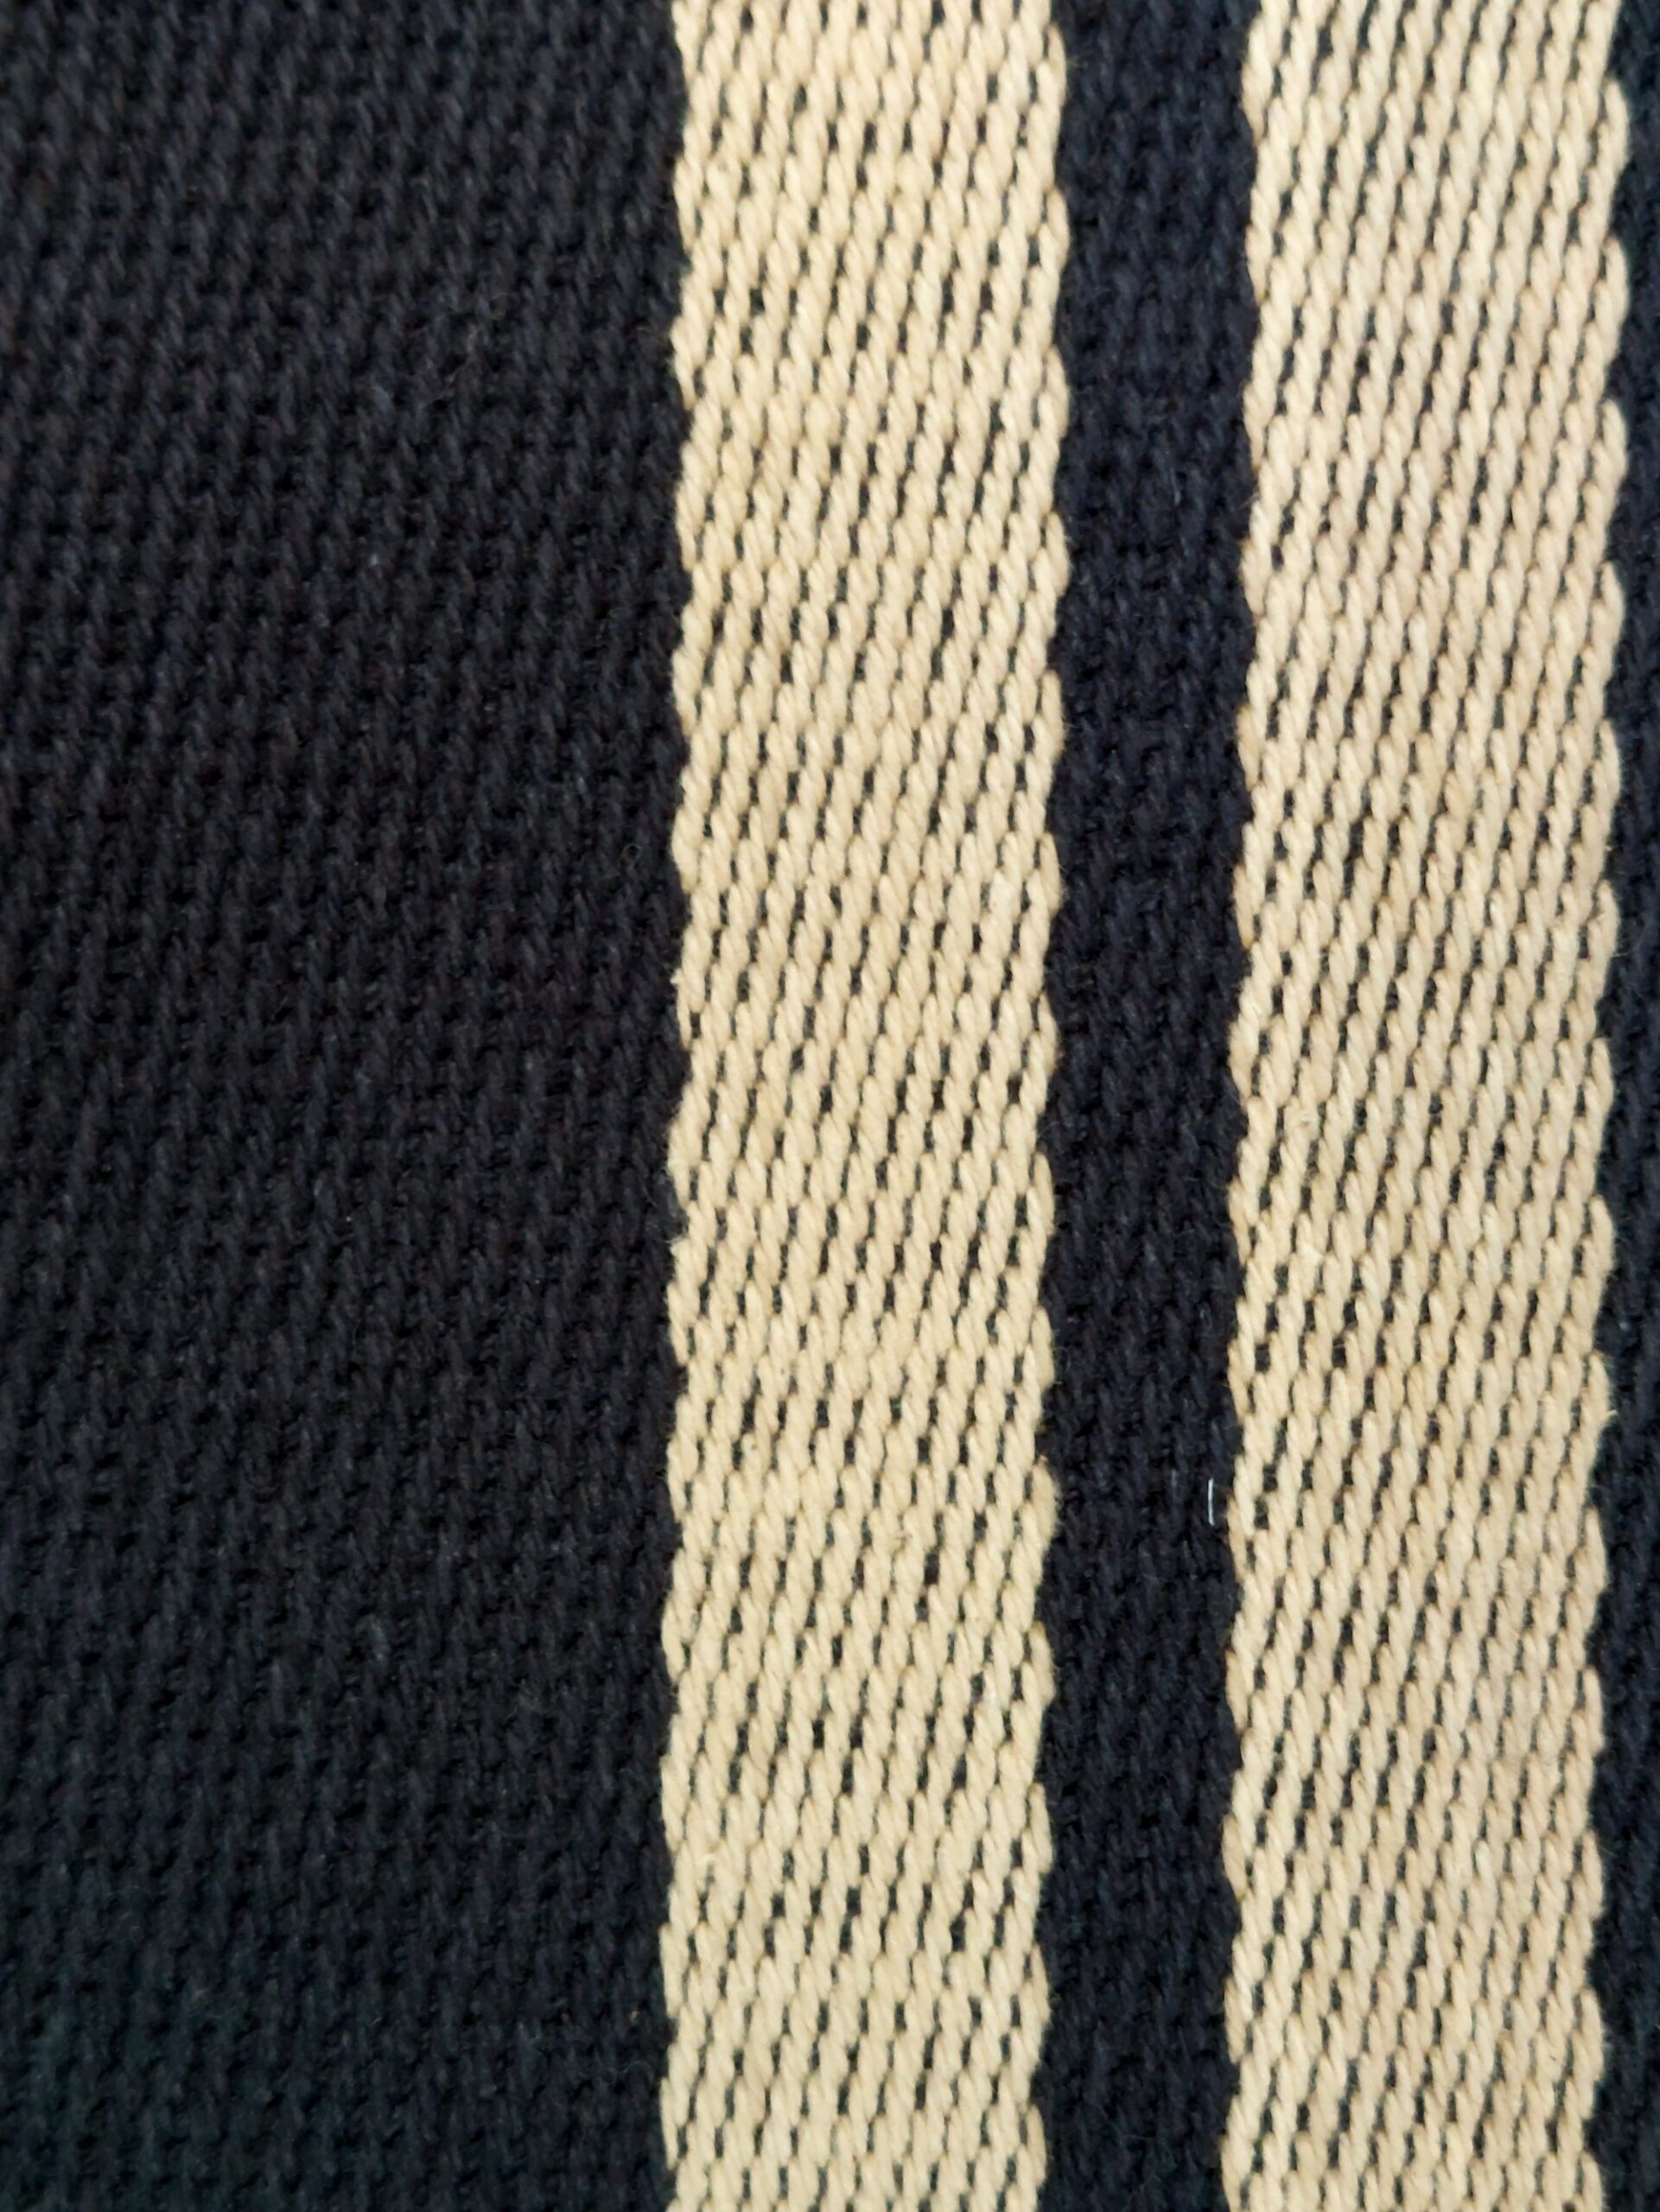 Herringbone twill border choices - Wholesale Carpets